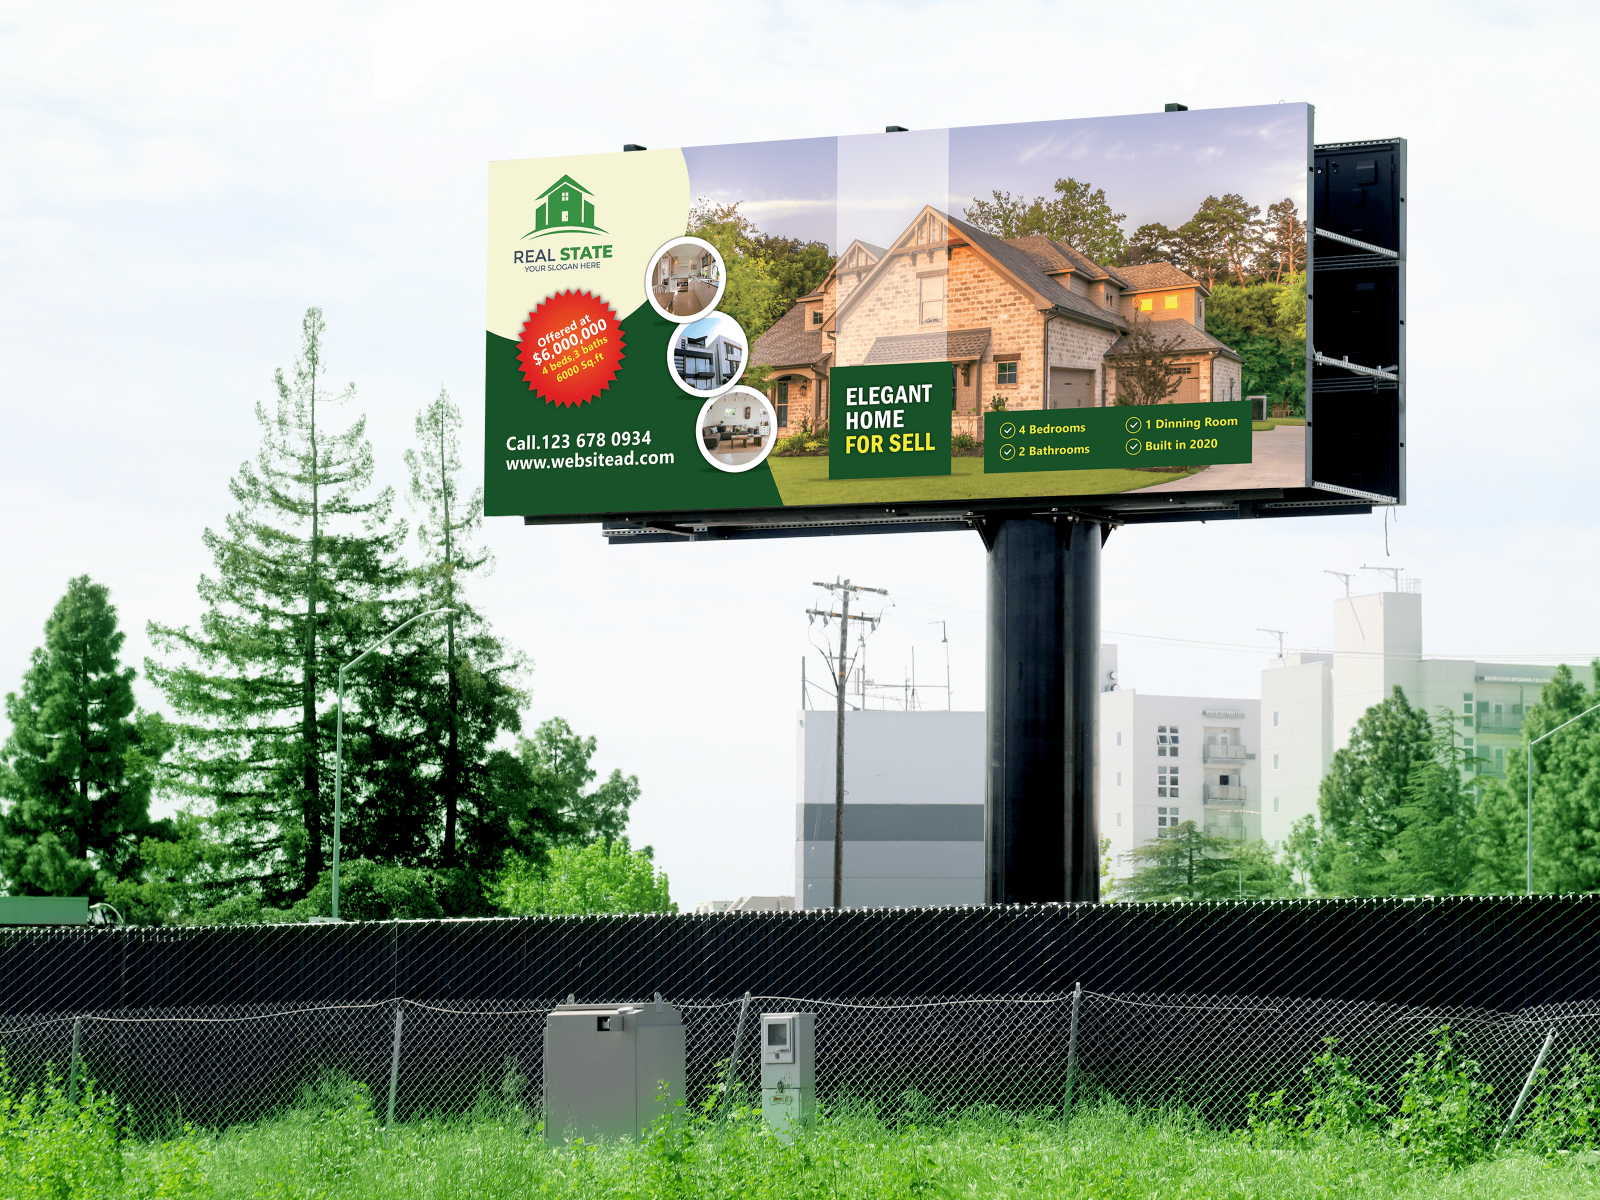 Real Estate Billboard Signage Design By Abrar Shakil On Dribbble